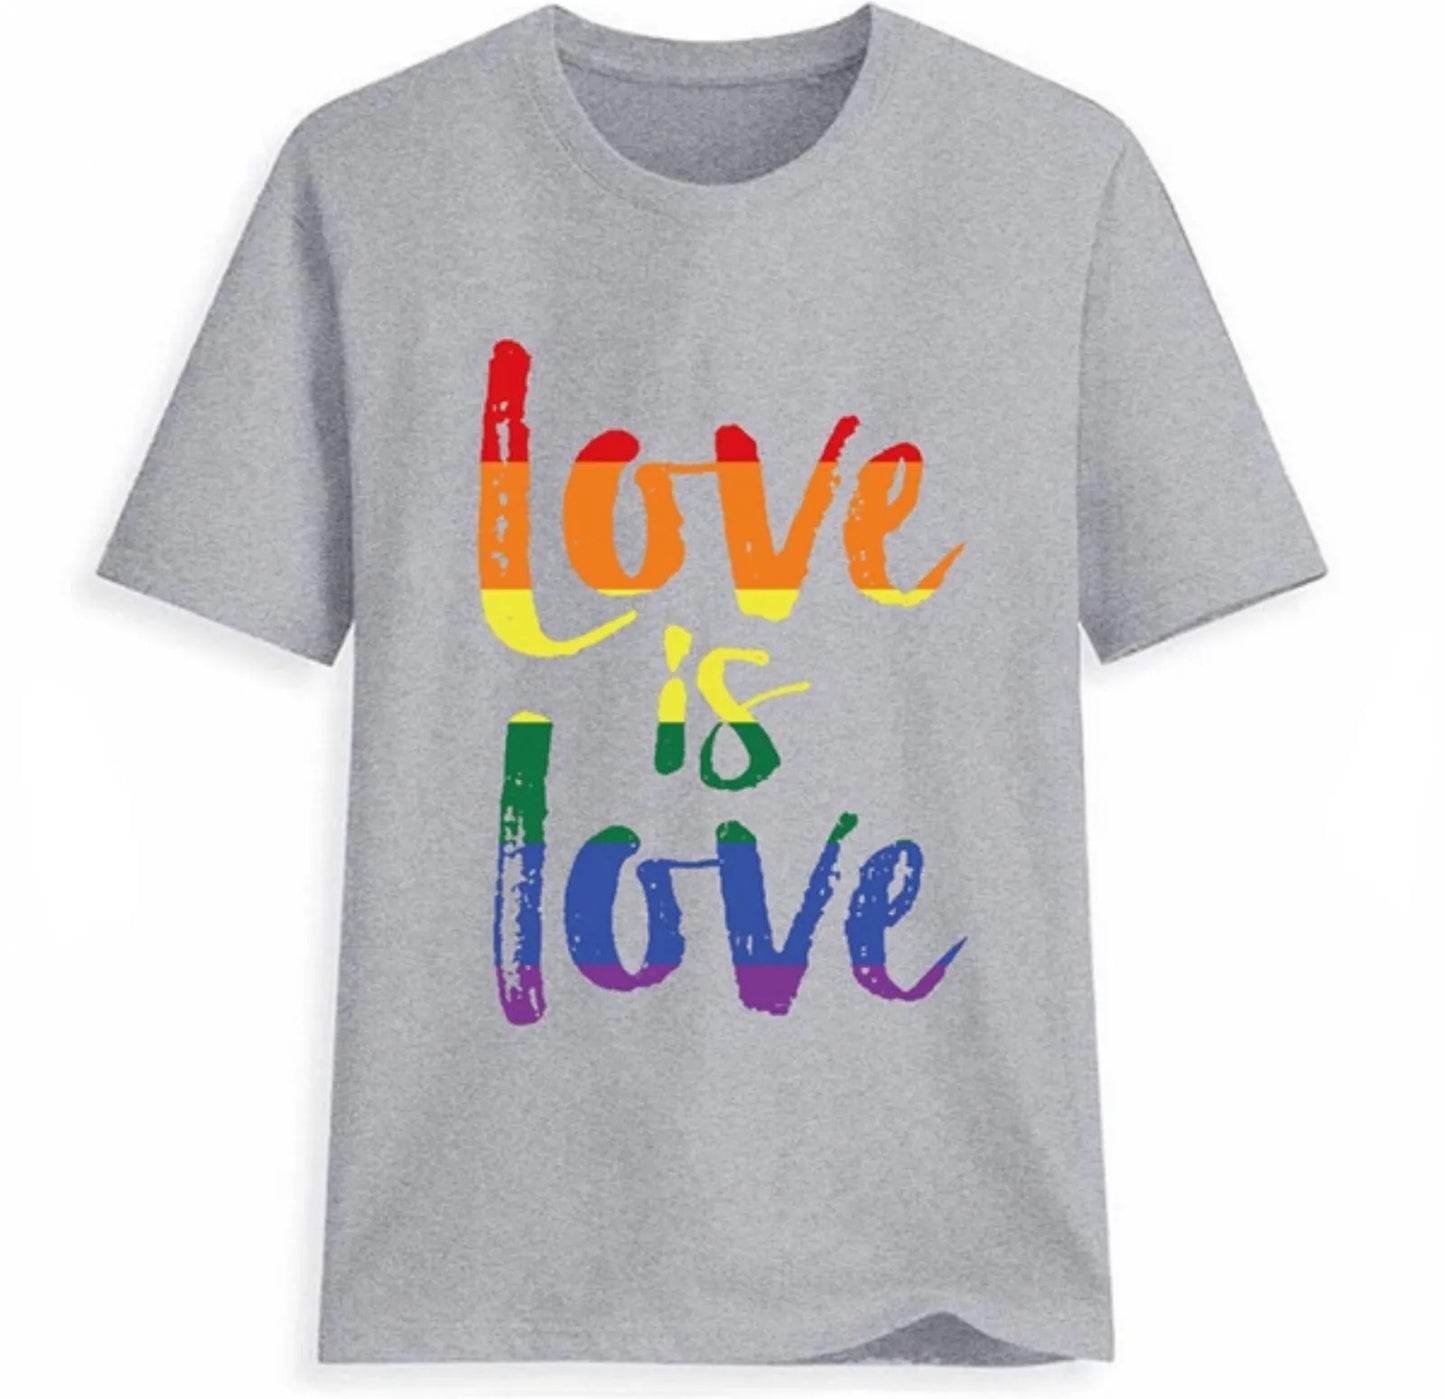 Love is love T-Shirt Grey Unisex